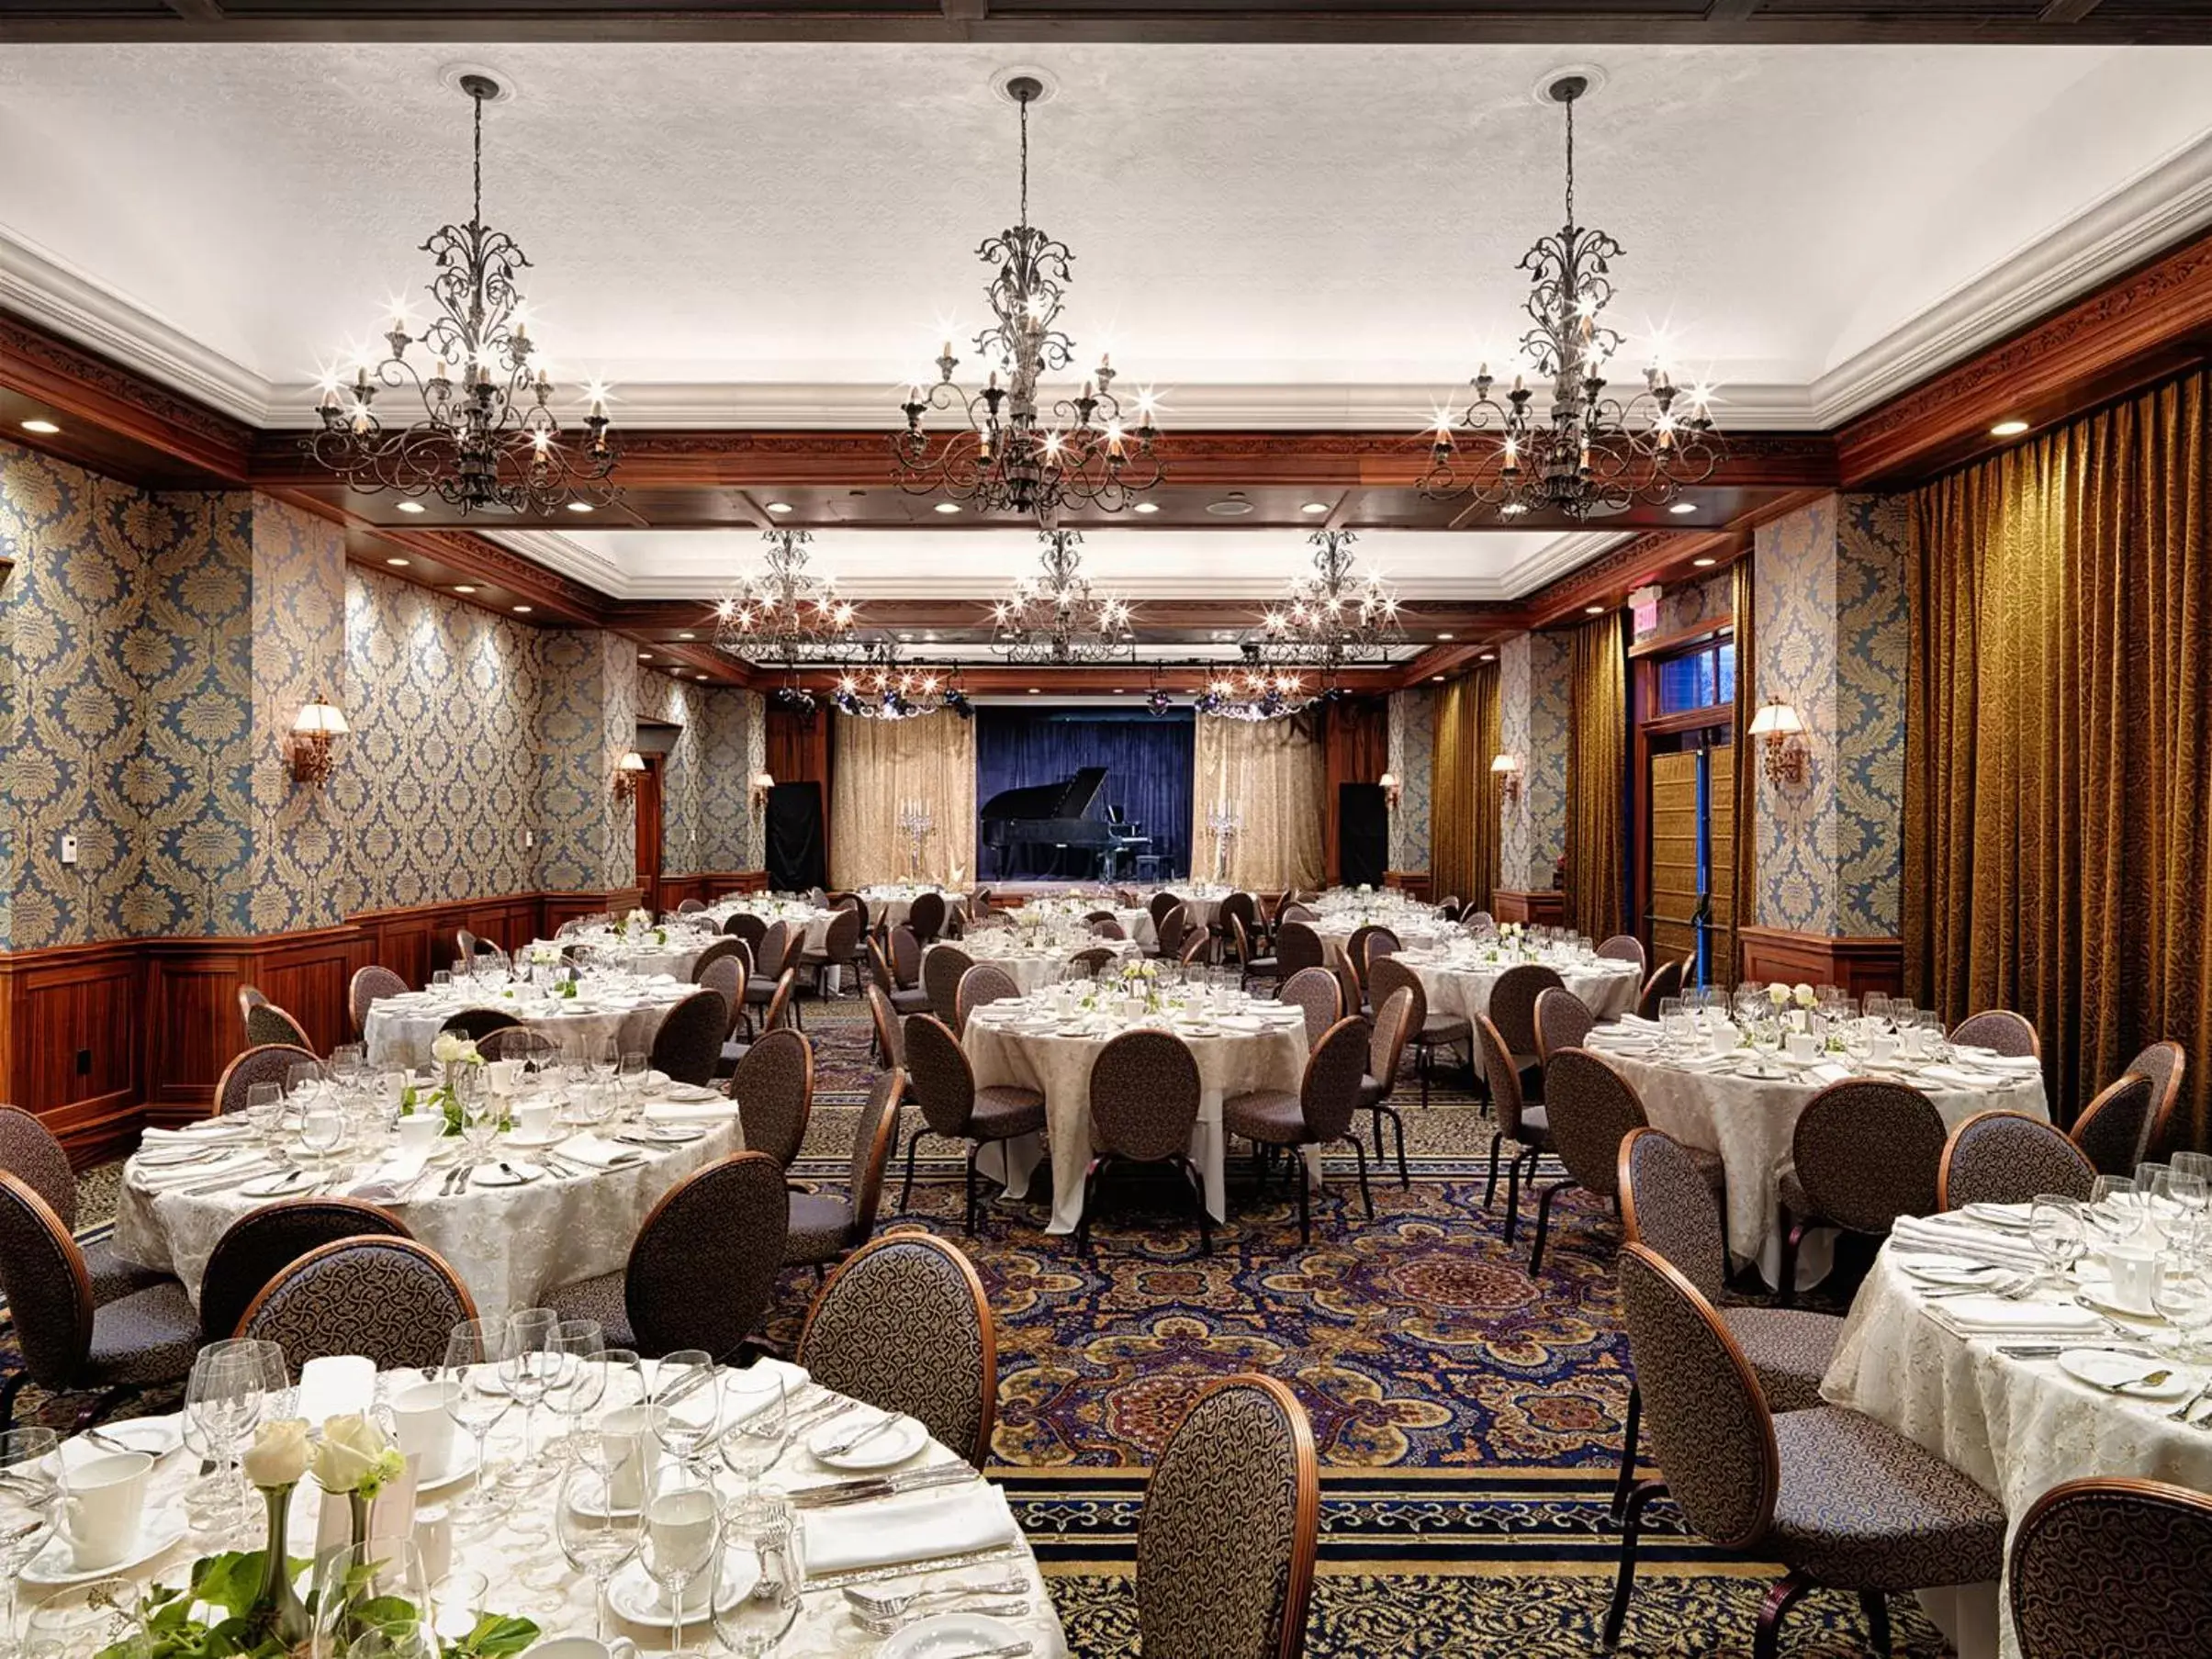 Banquet/Function facilities, Banquet Facilities in Oak Bay Beach Hotel